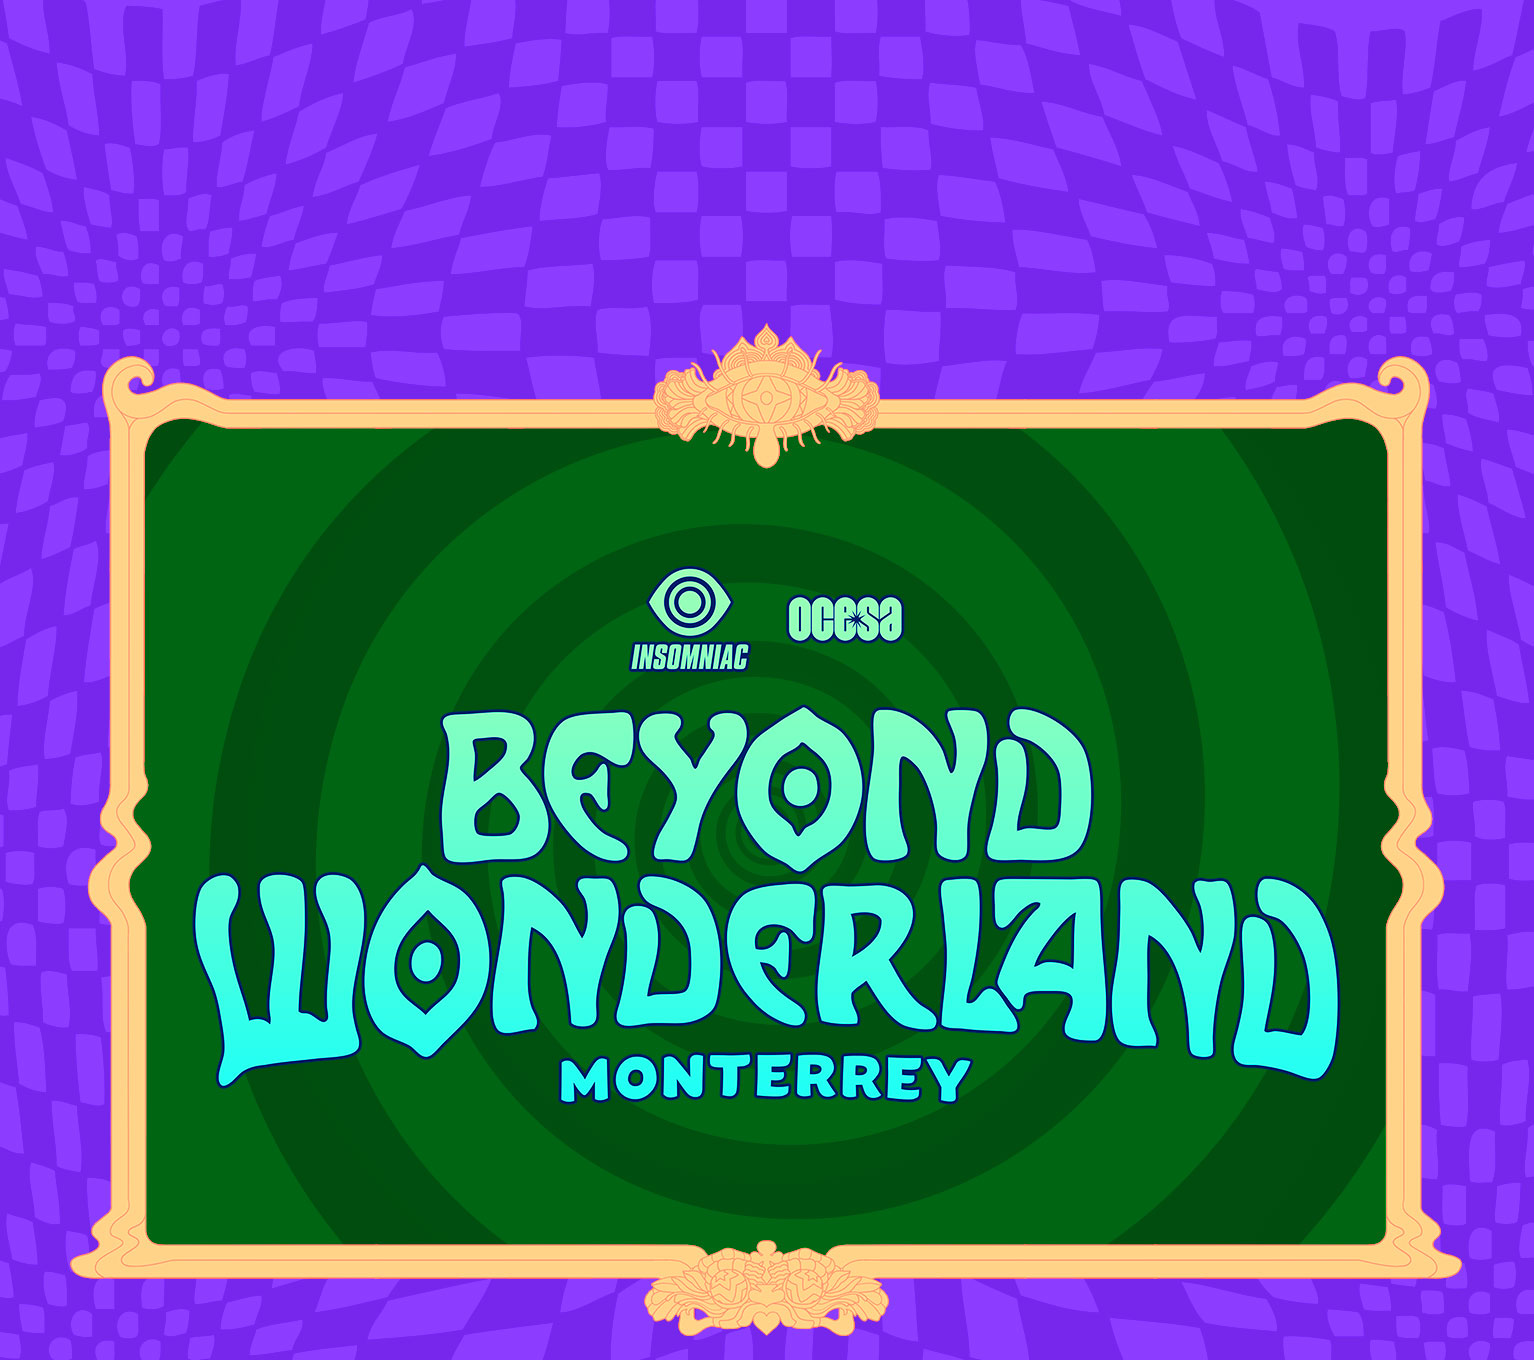 beyond wonderland location